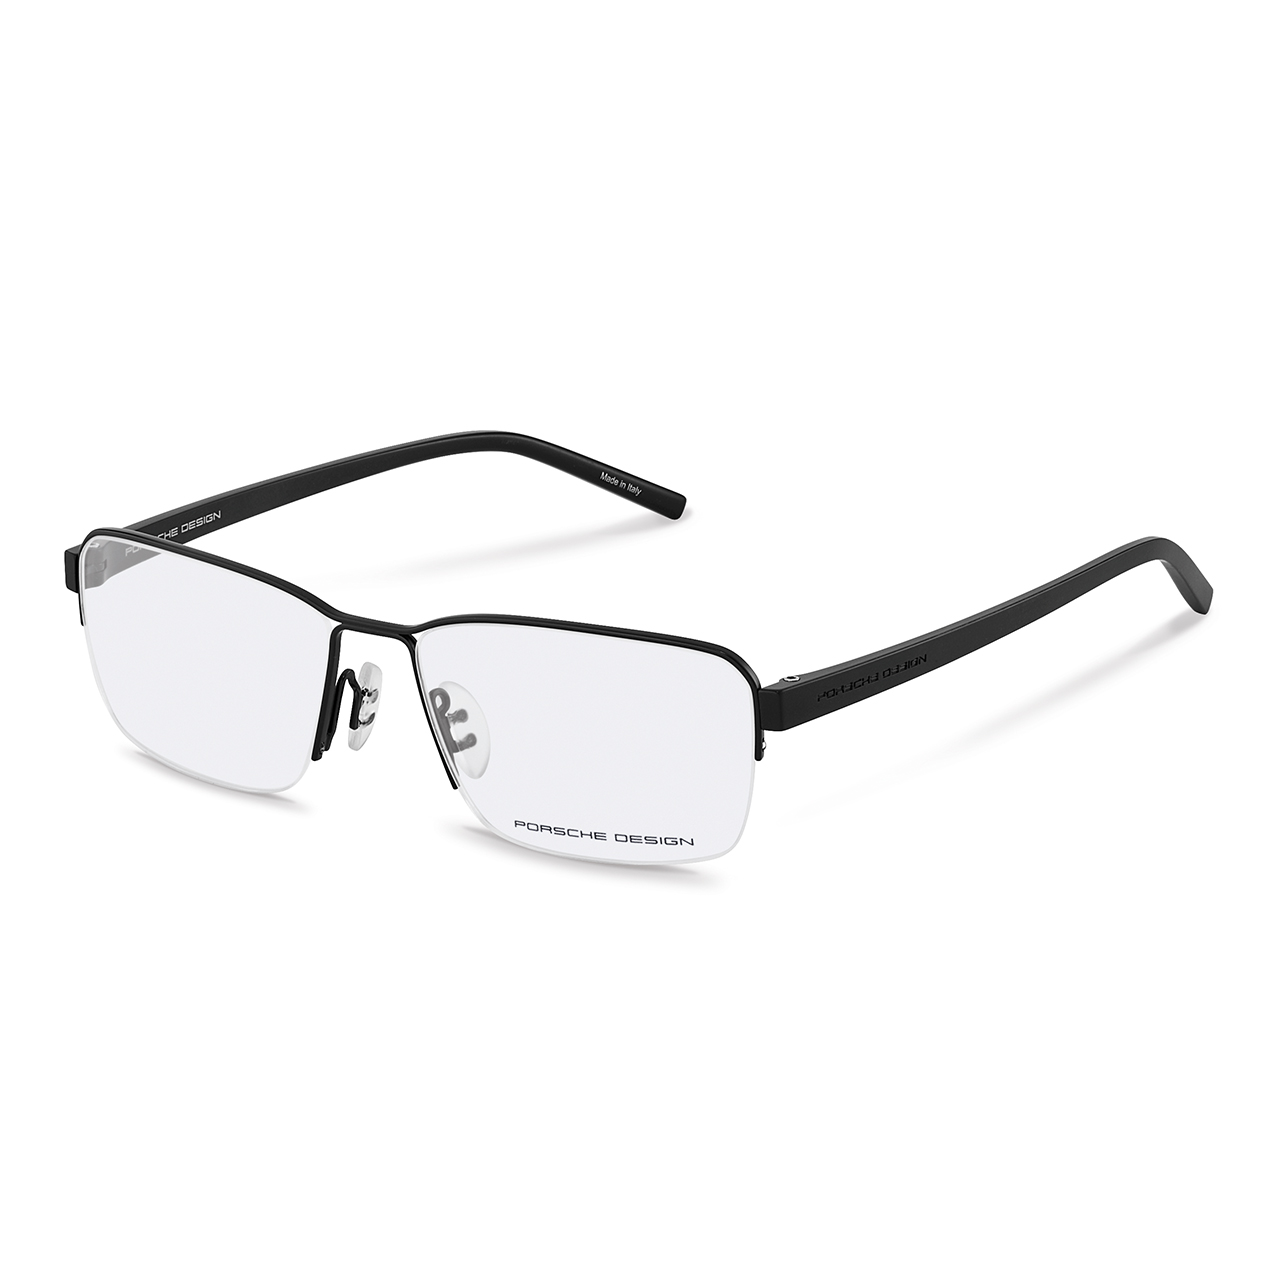 NEW Porsche Design P8285 C 56mmSatin Titanium Grey Optical Eyeglasses Frames 